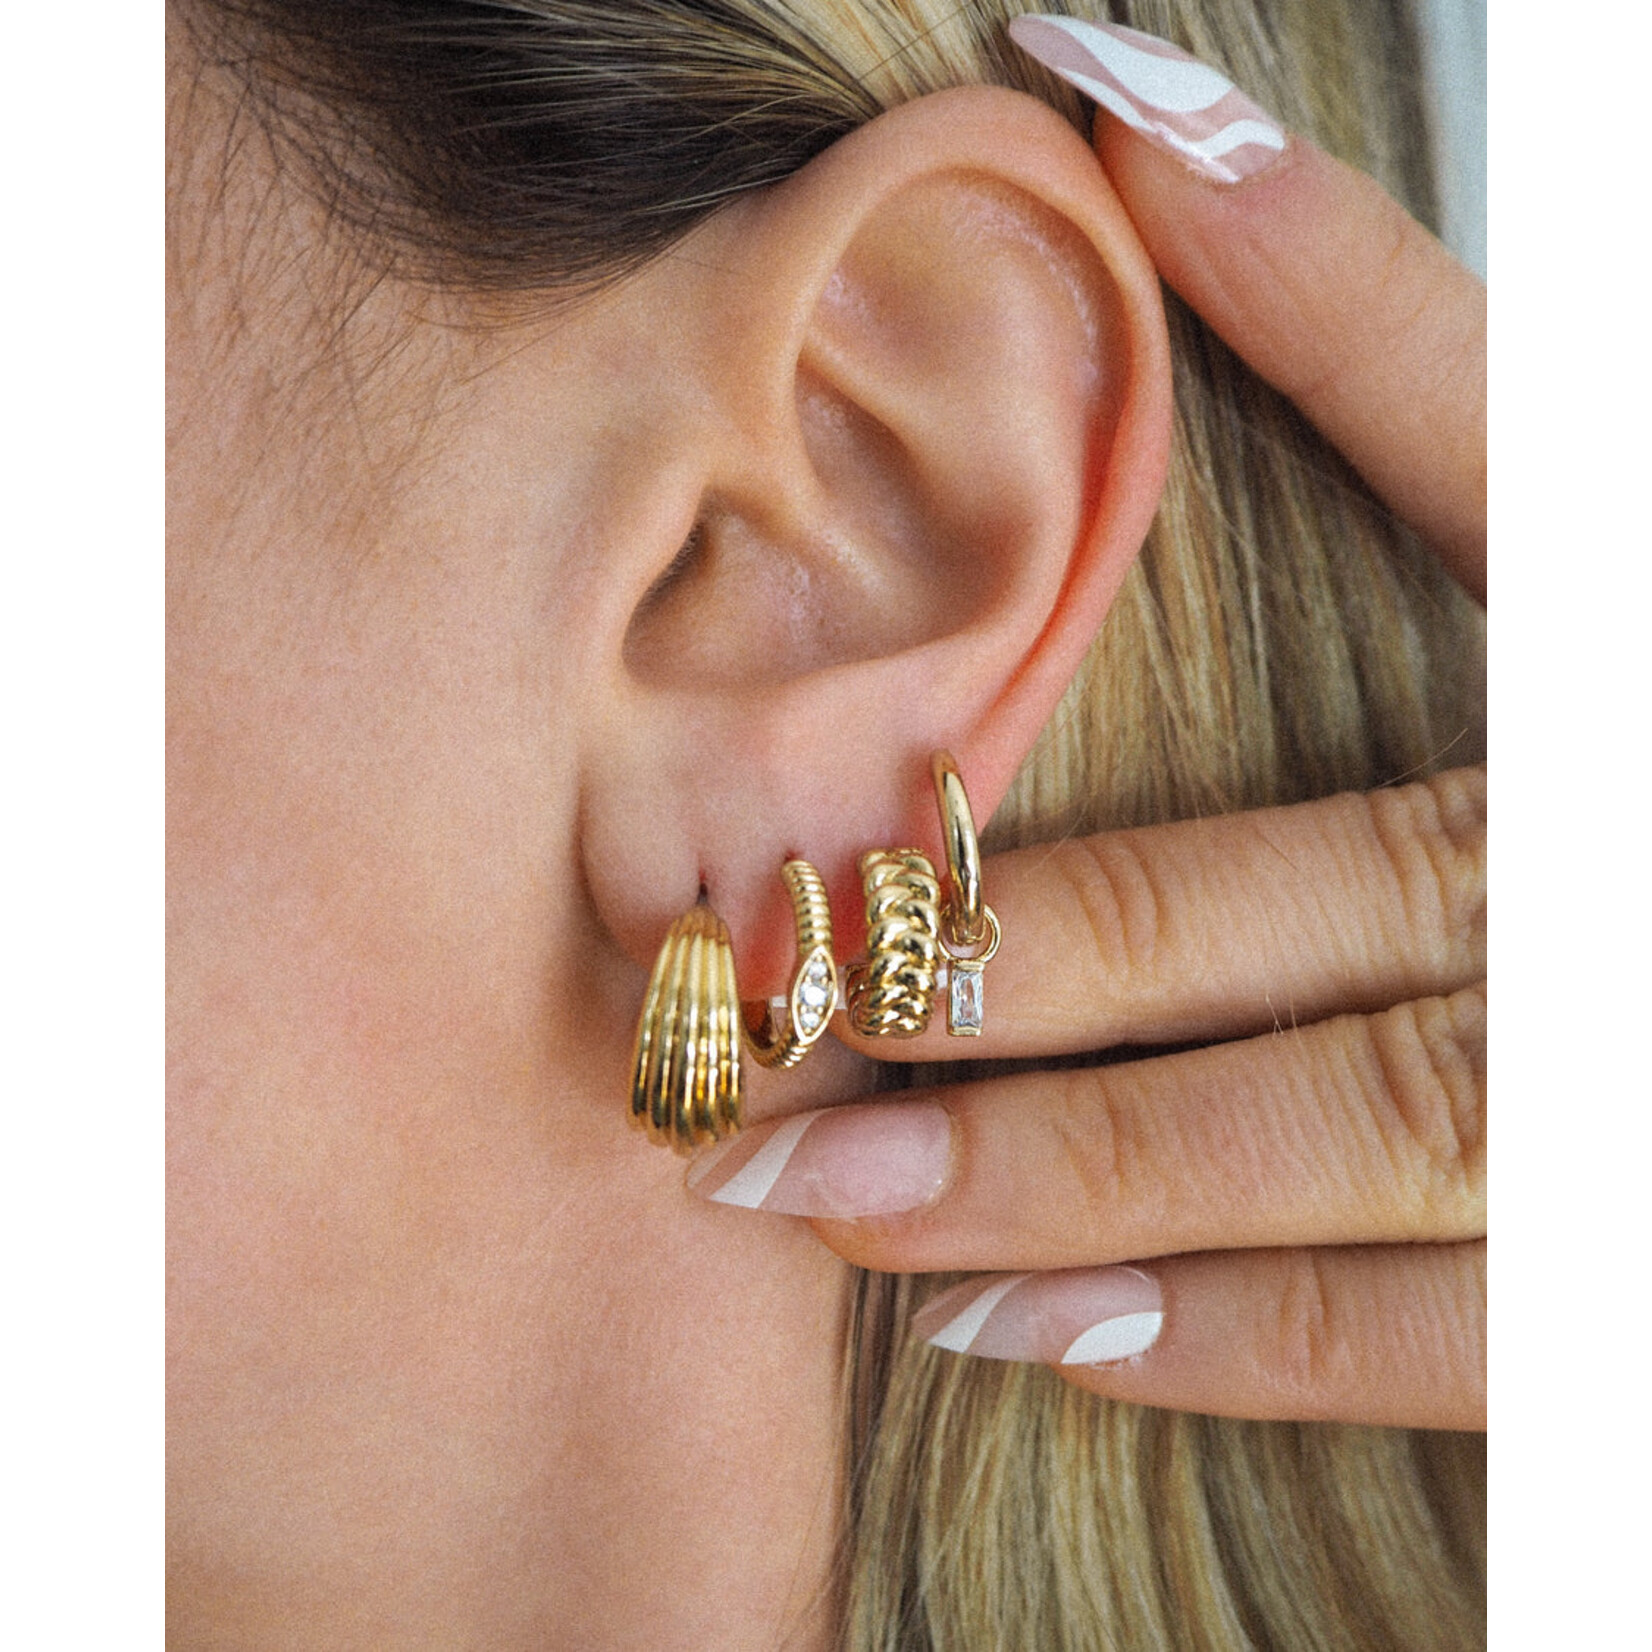 Summit Earrings 14k gold plated, cubic zirconia